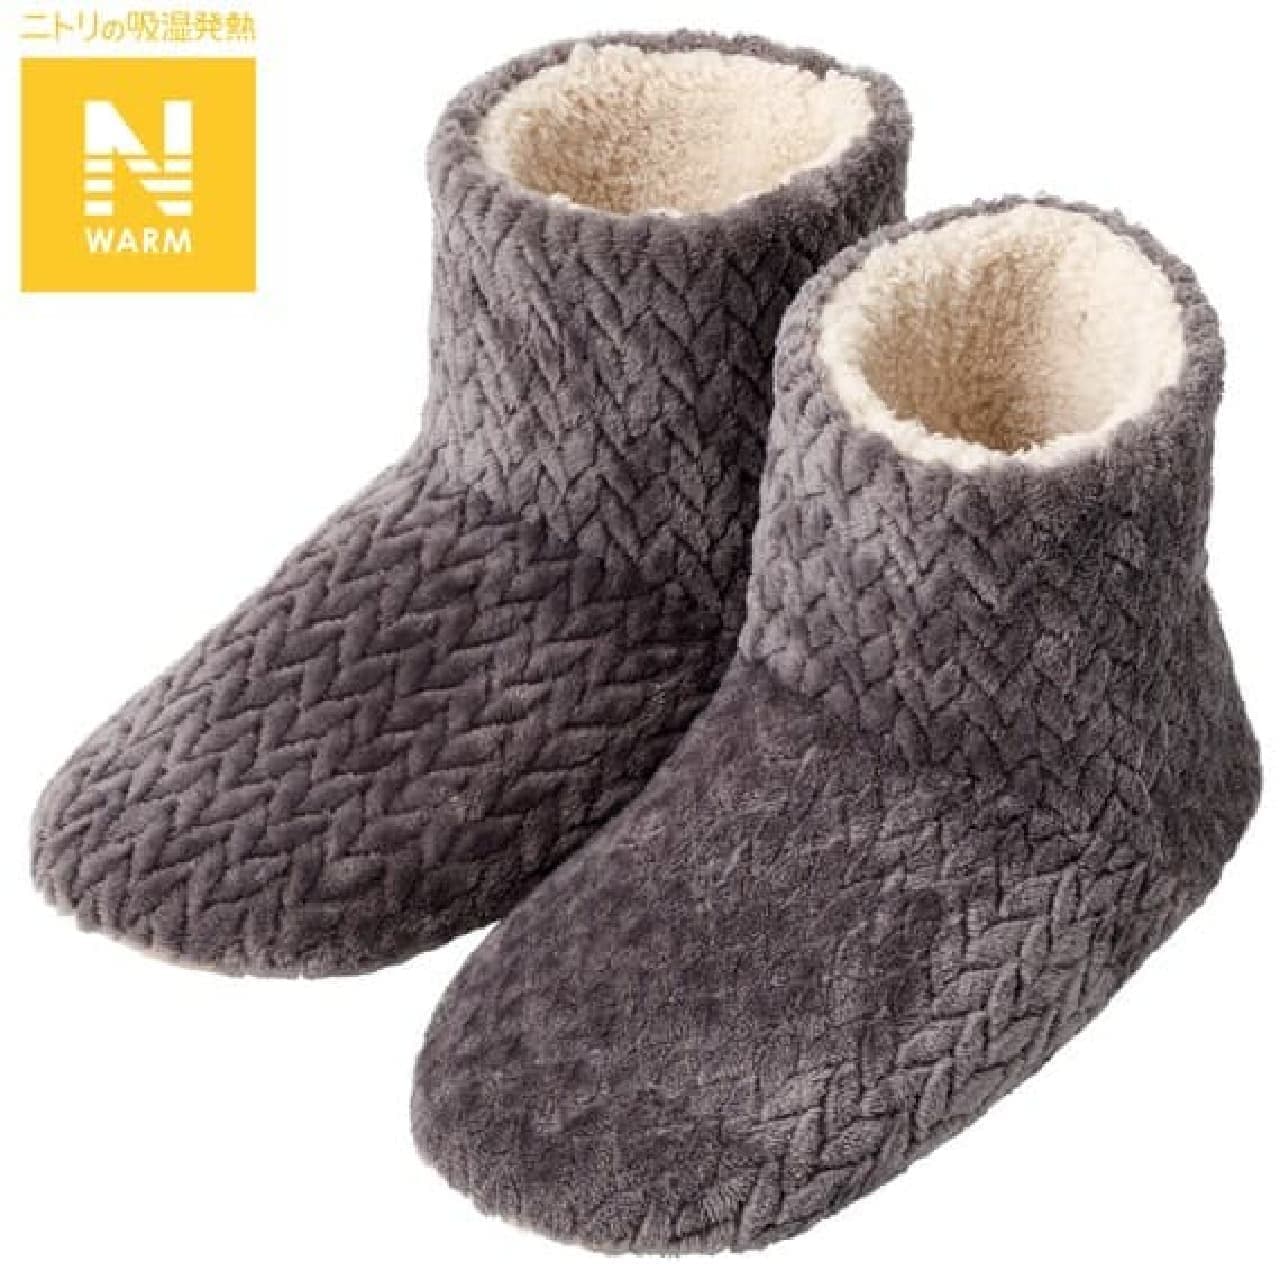 N-Warm Room Boots (Knit sRBx02 GY)